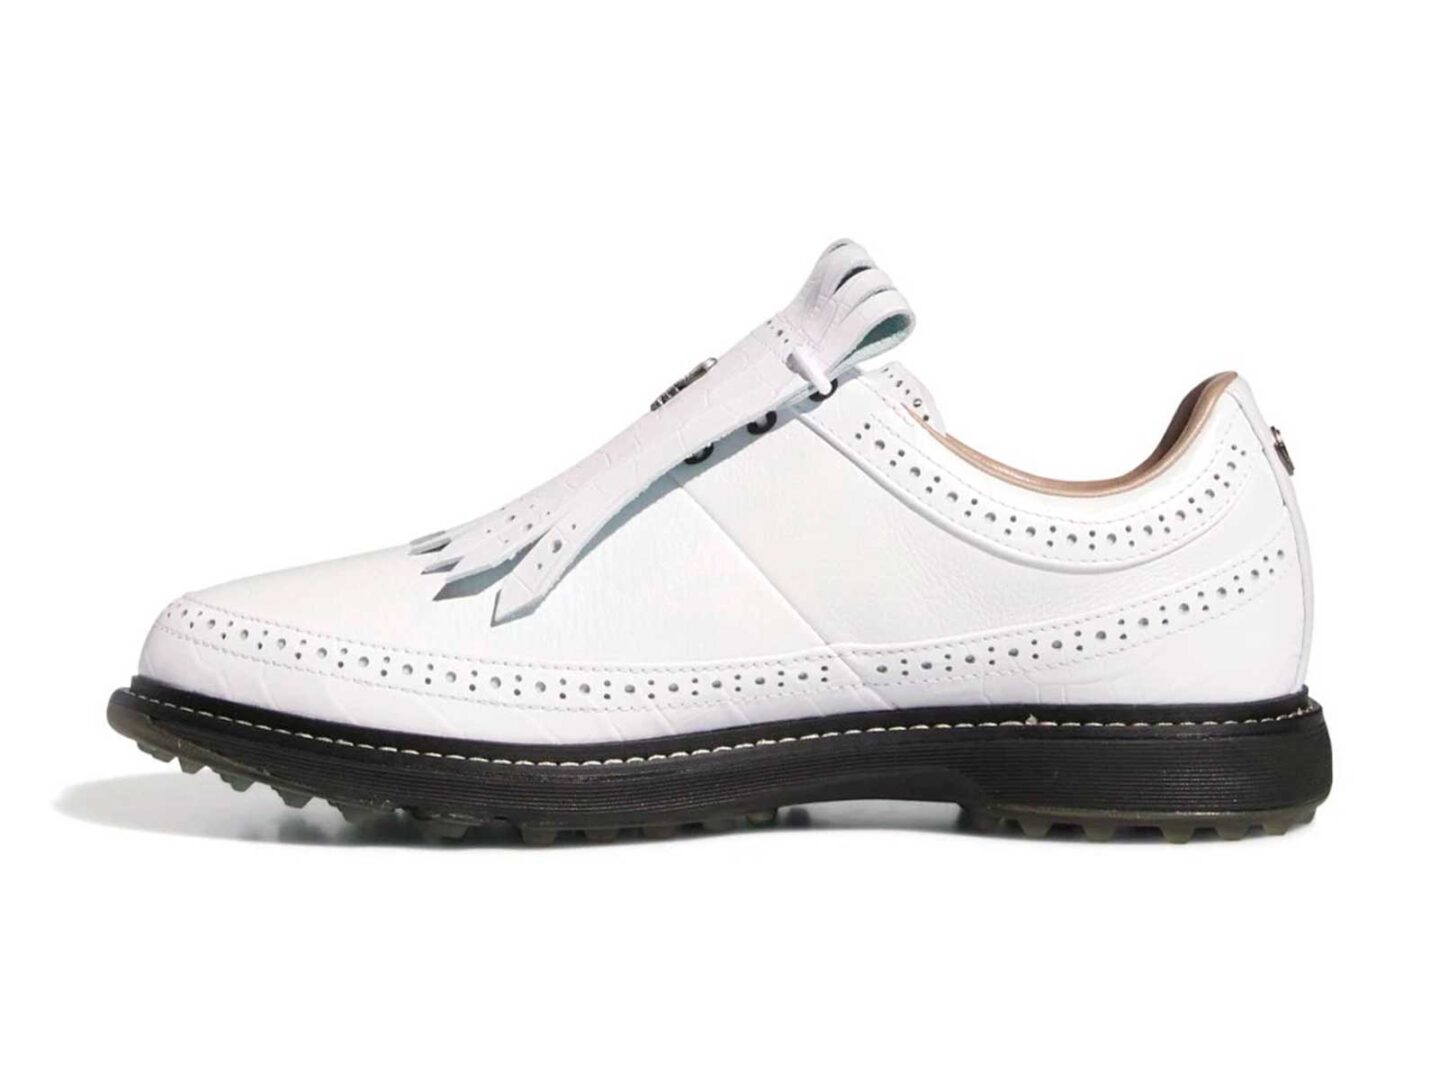 This is the Bogey Boys x adidas MC80 Golf Shoe